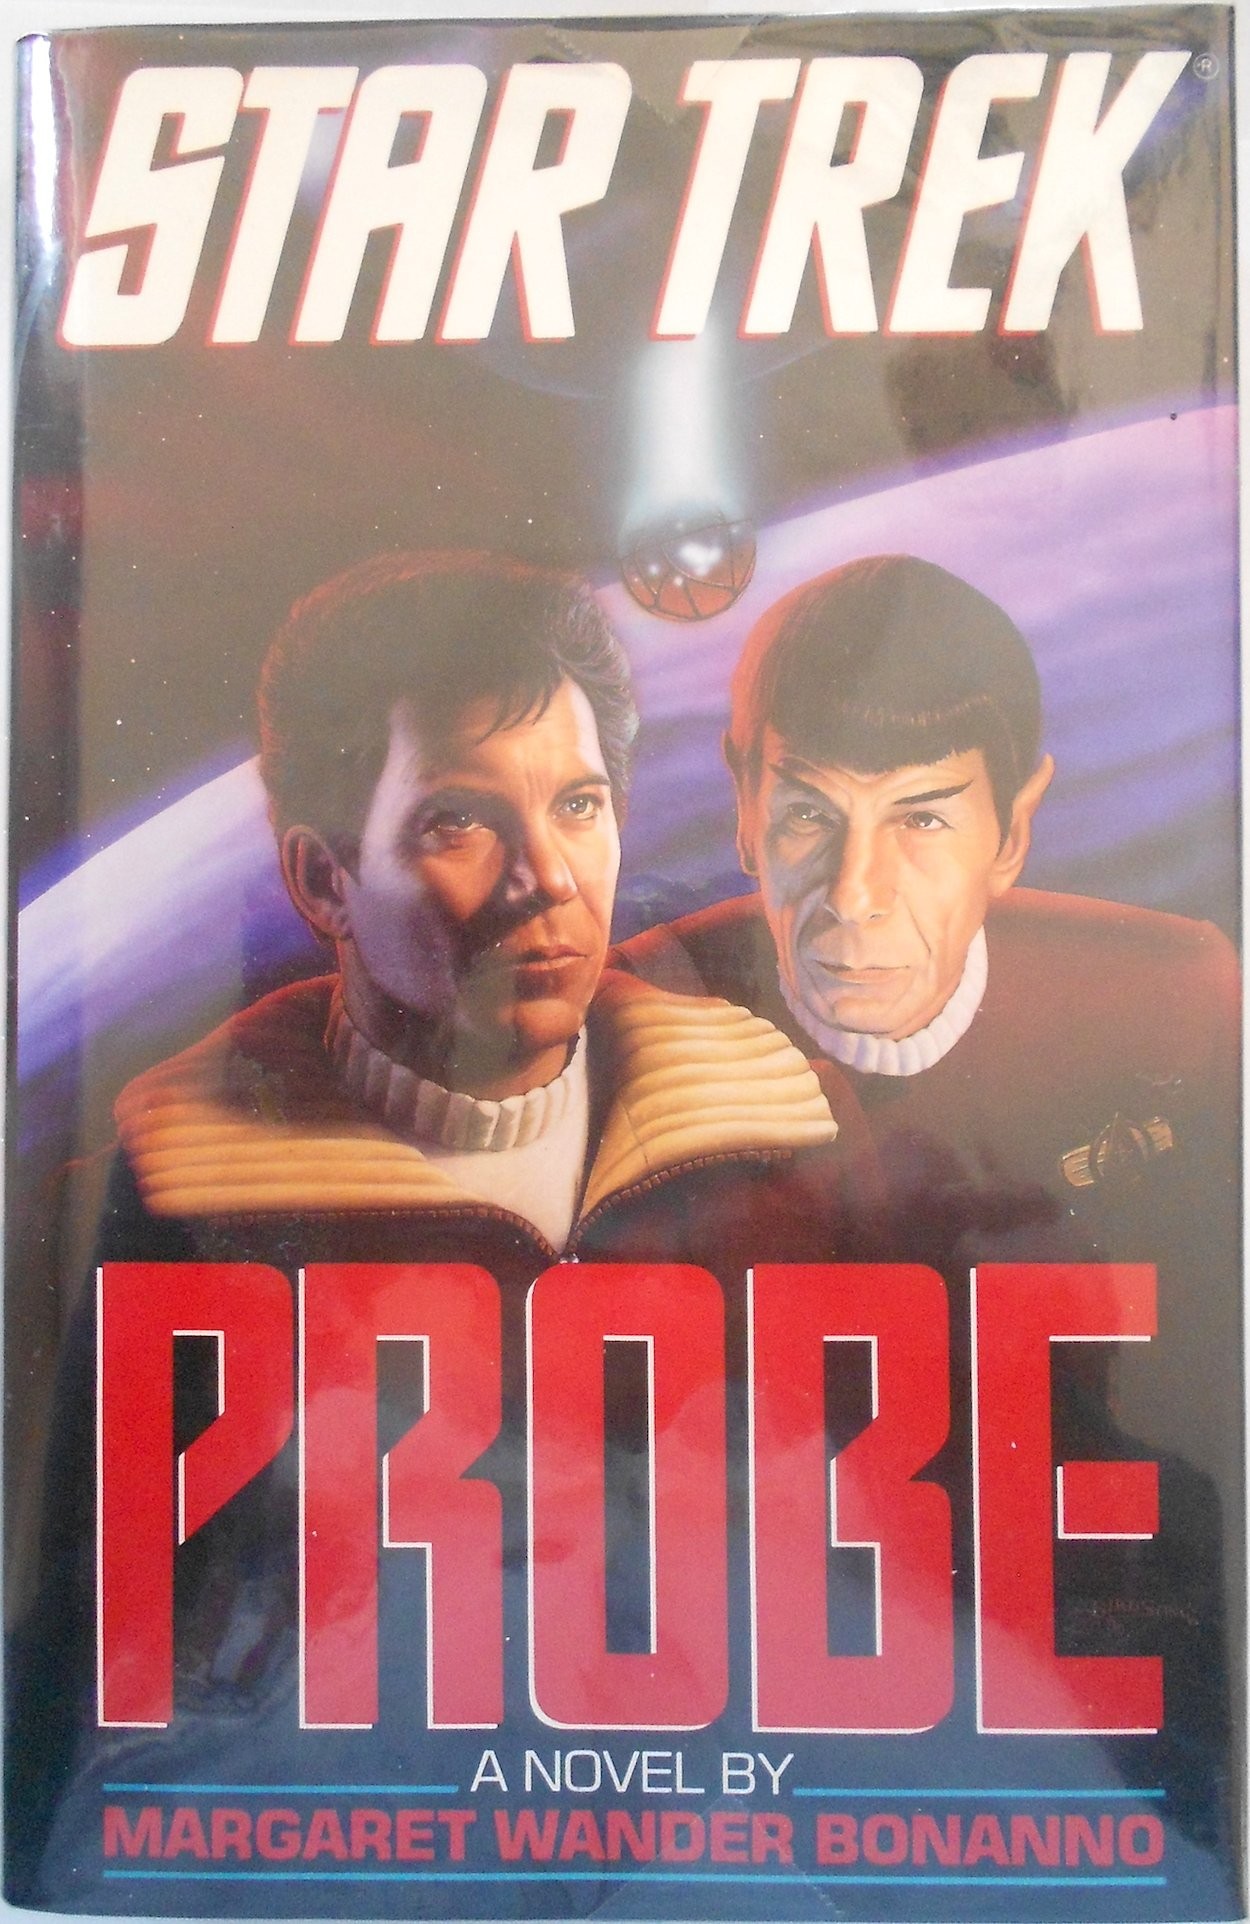 Star Trek: Probe